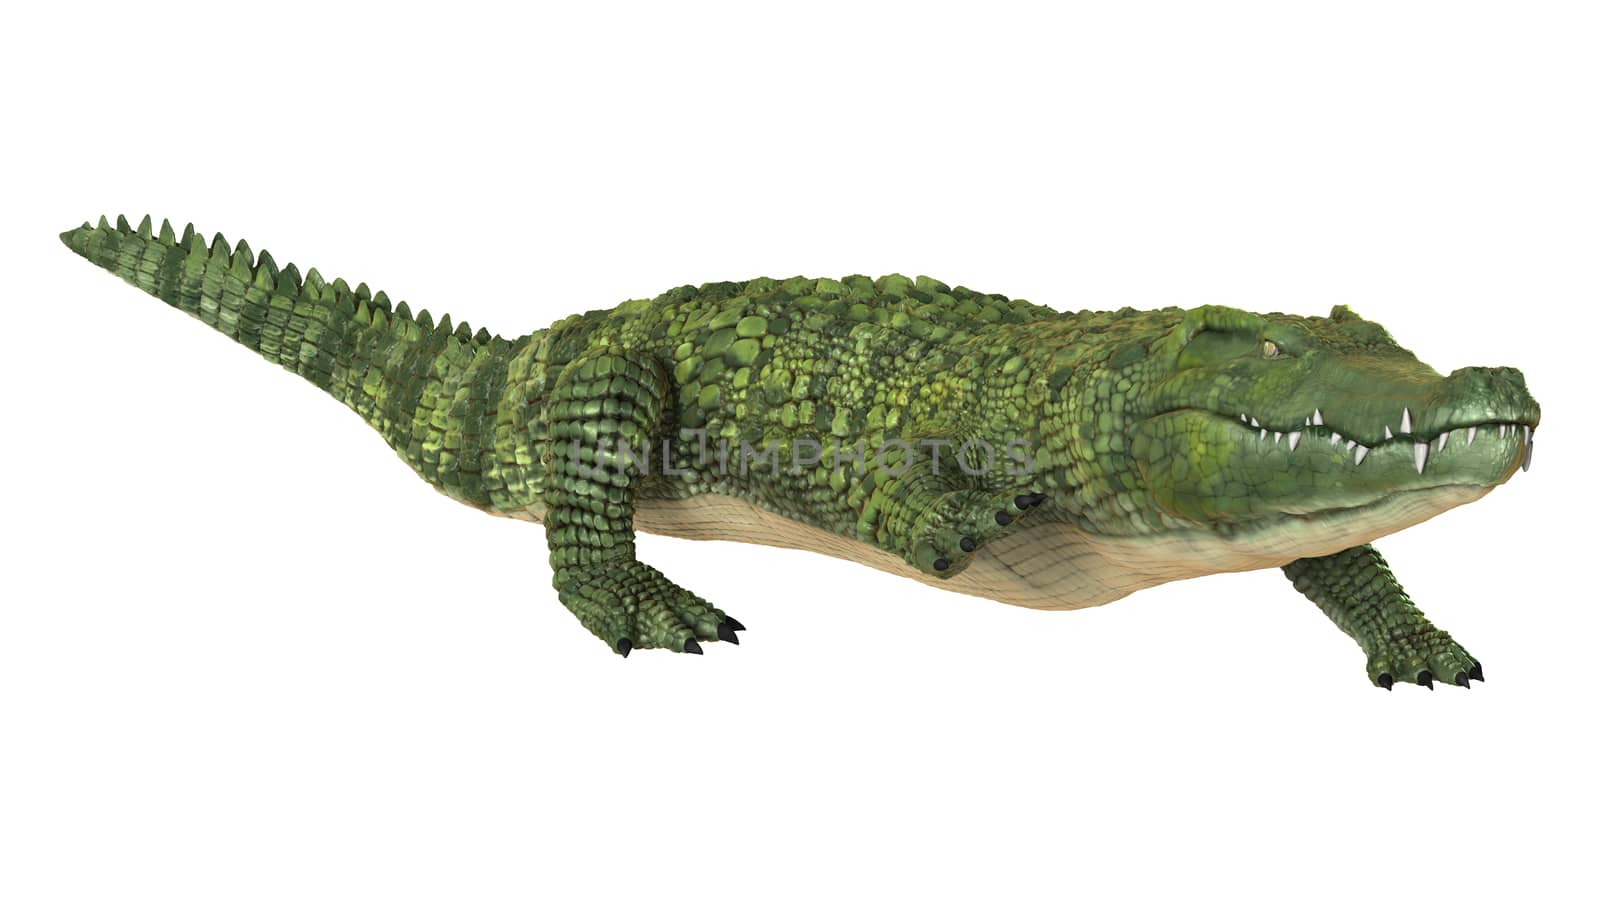 Crocodile by Vac